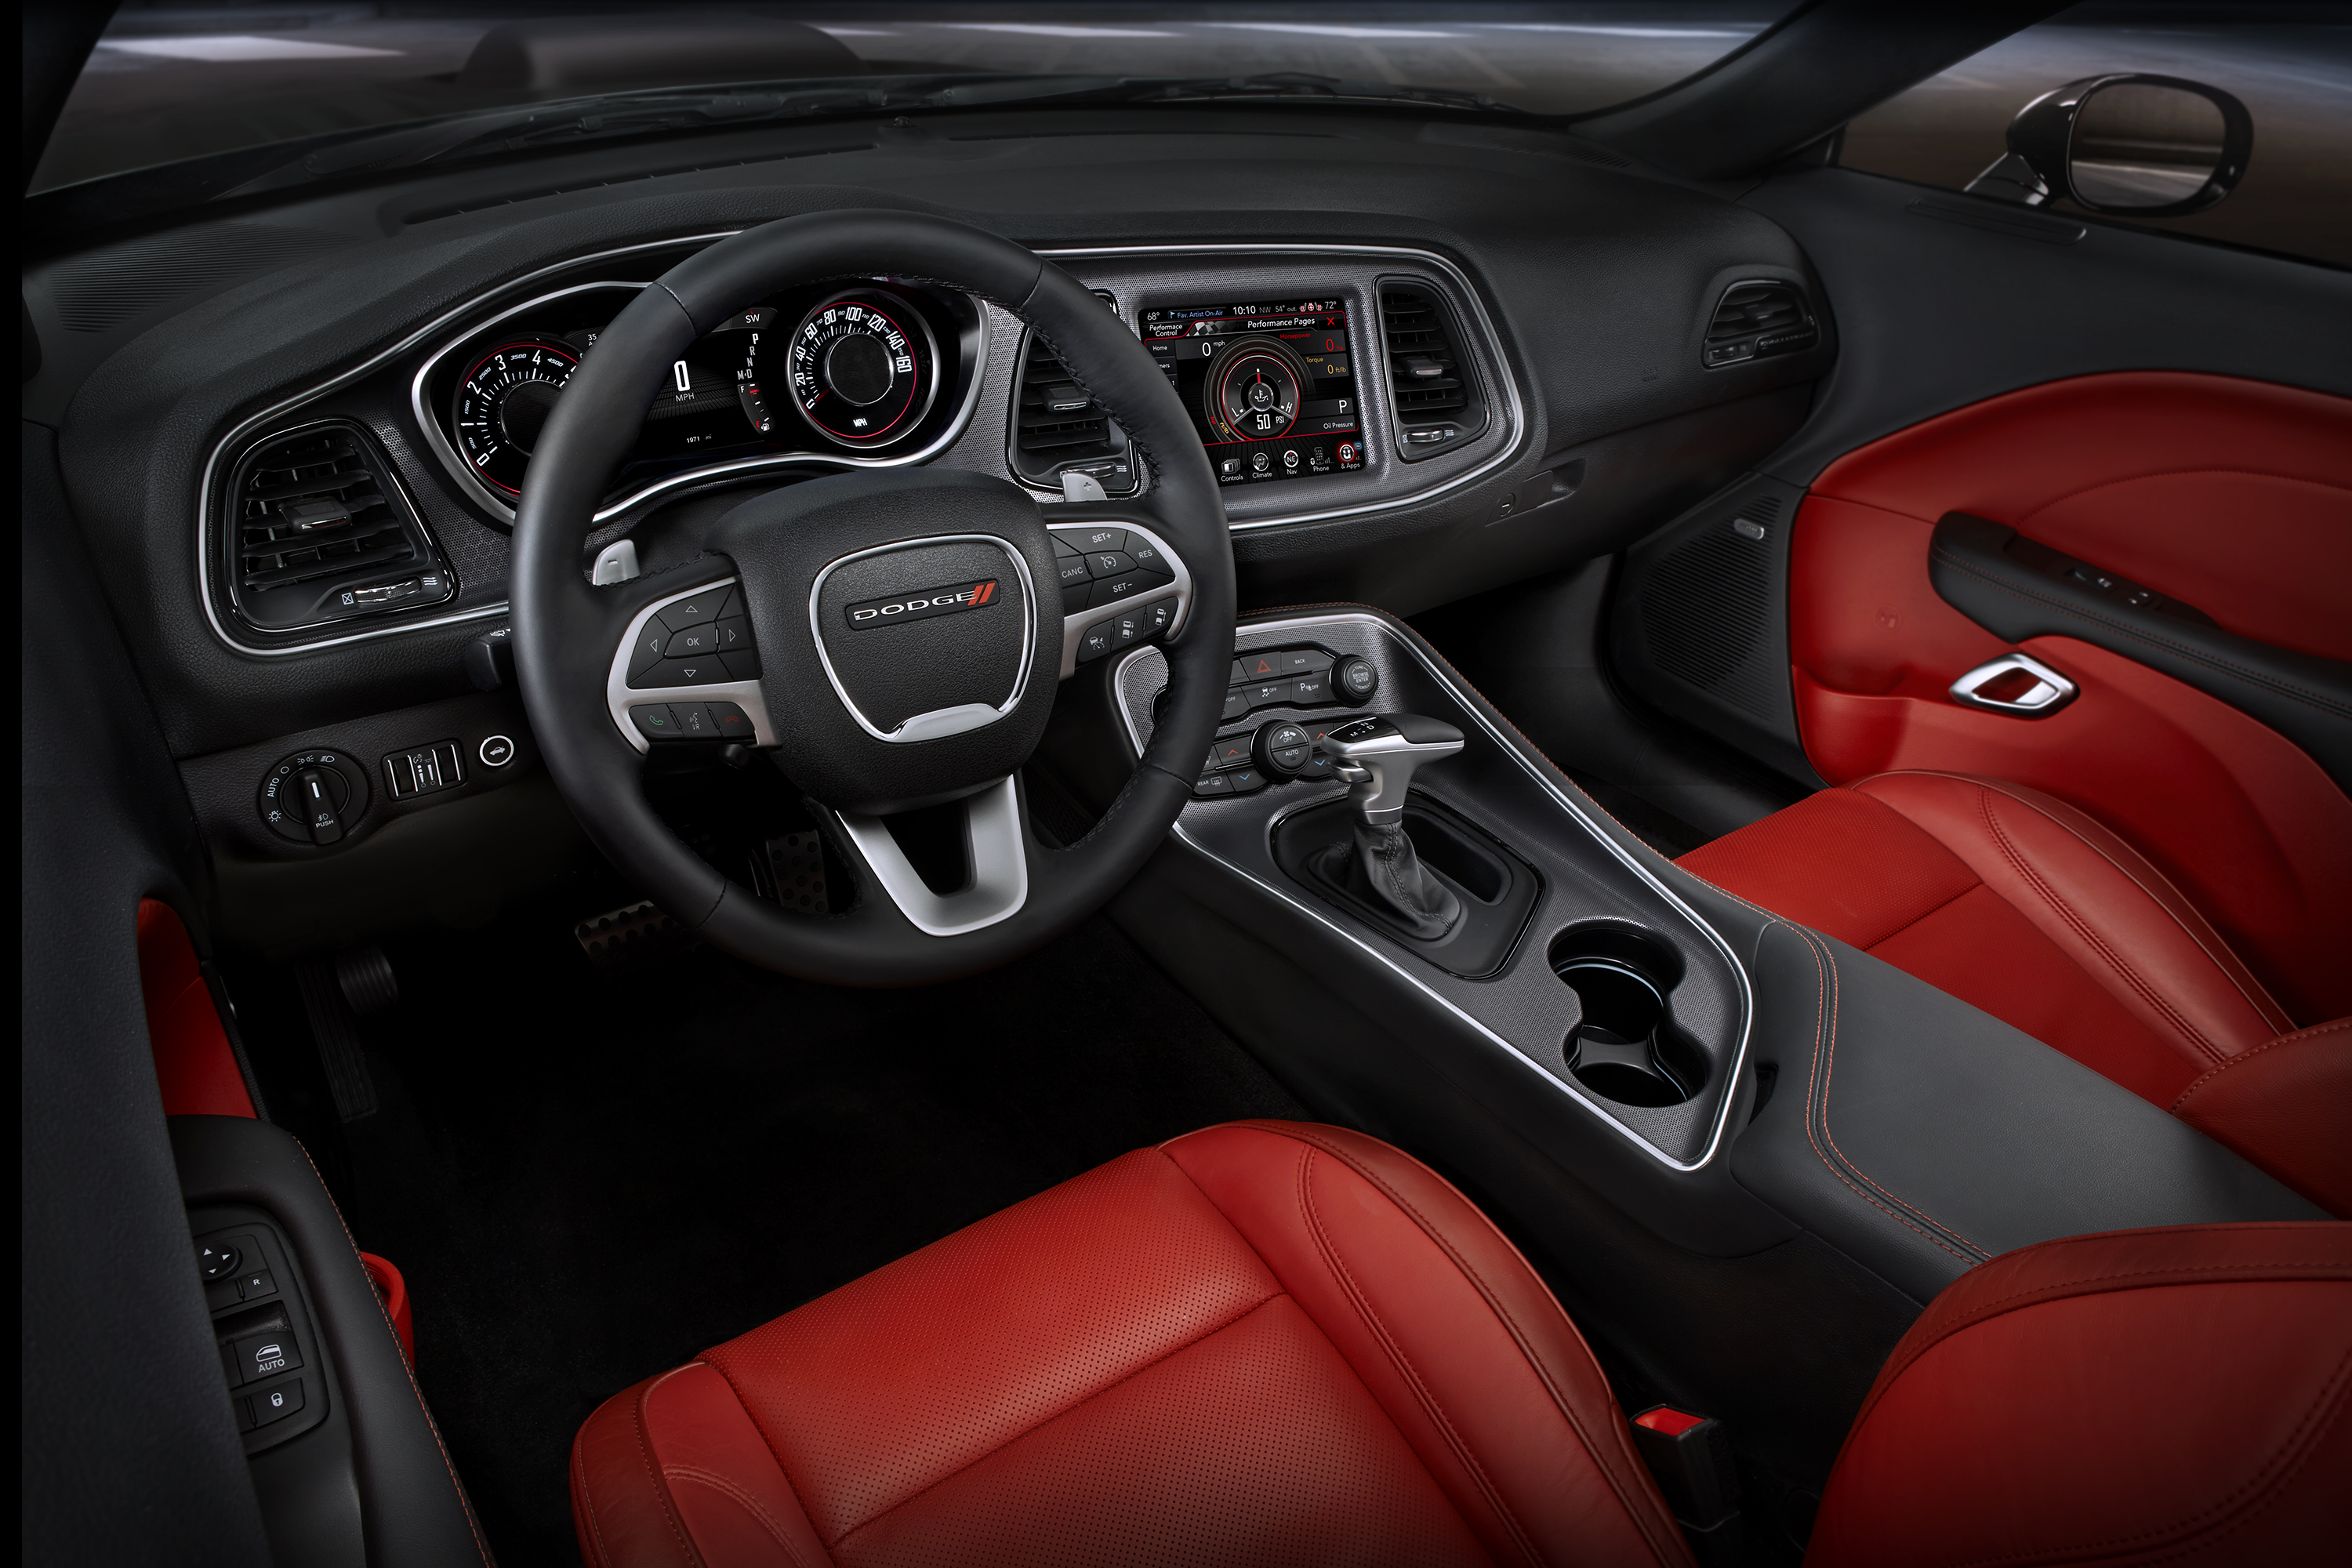 2016 Dodge Challenger SXT Plus (shown in Ruby Red/Black)